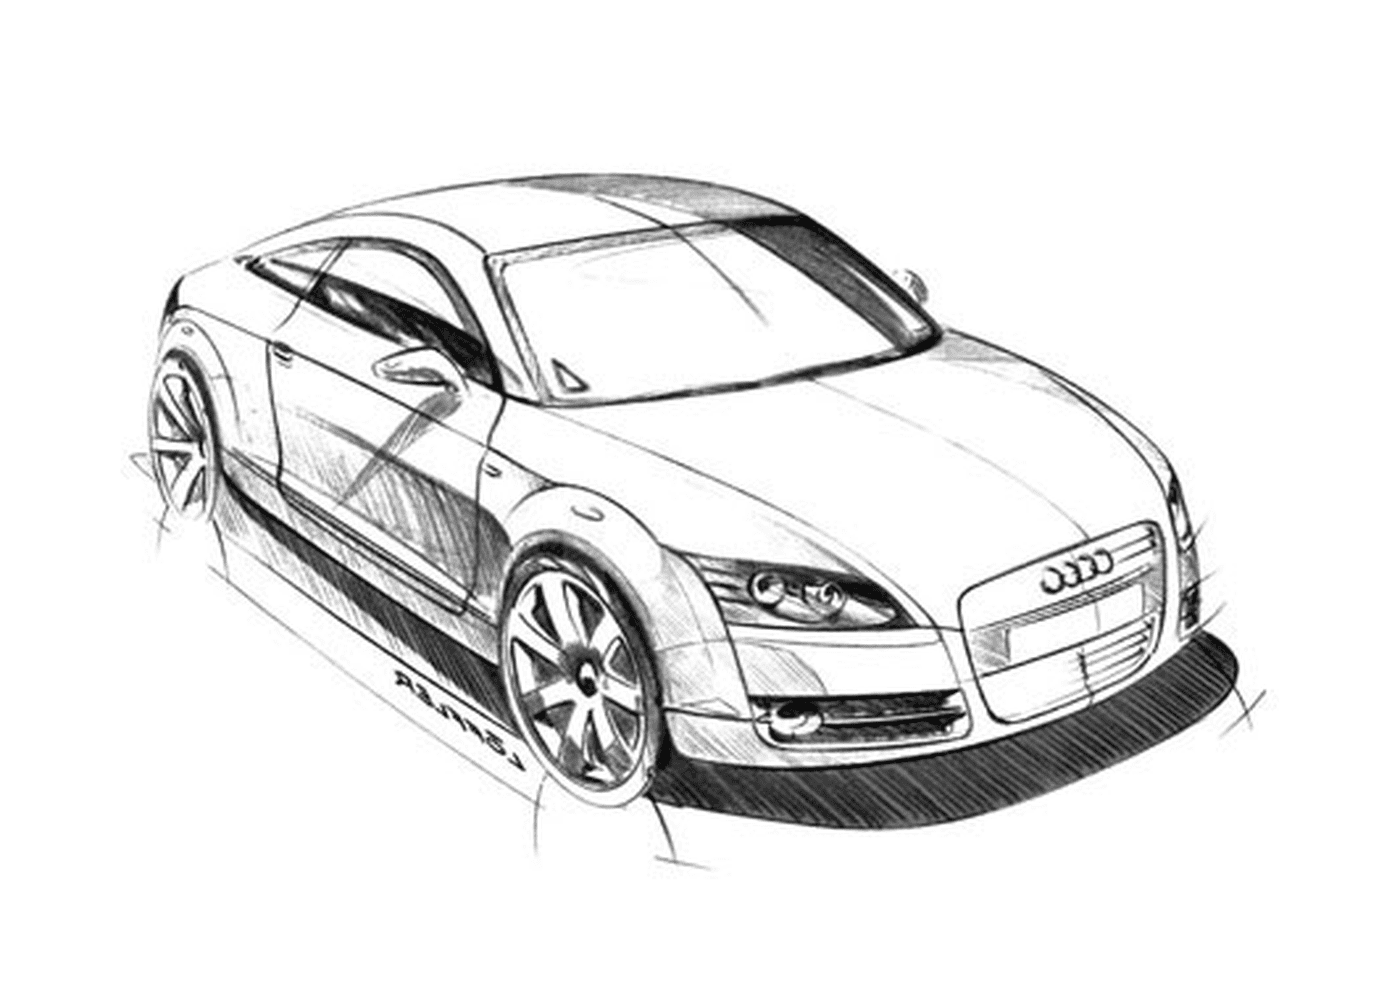  Снимок автомобиля Audi, автомобиль Audi 